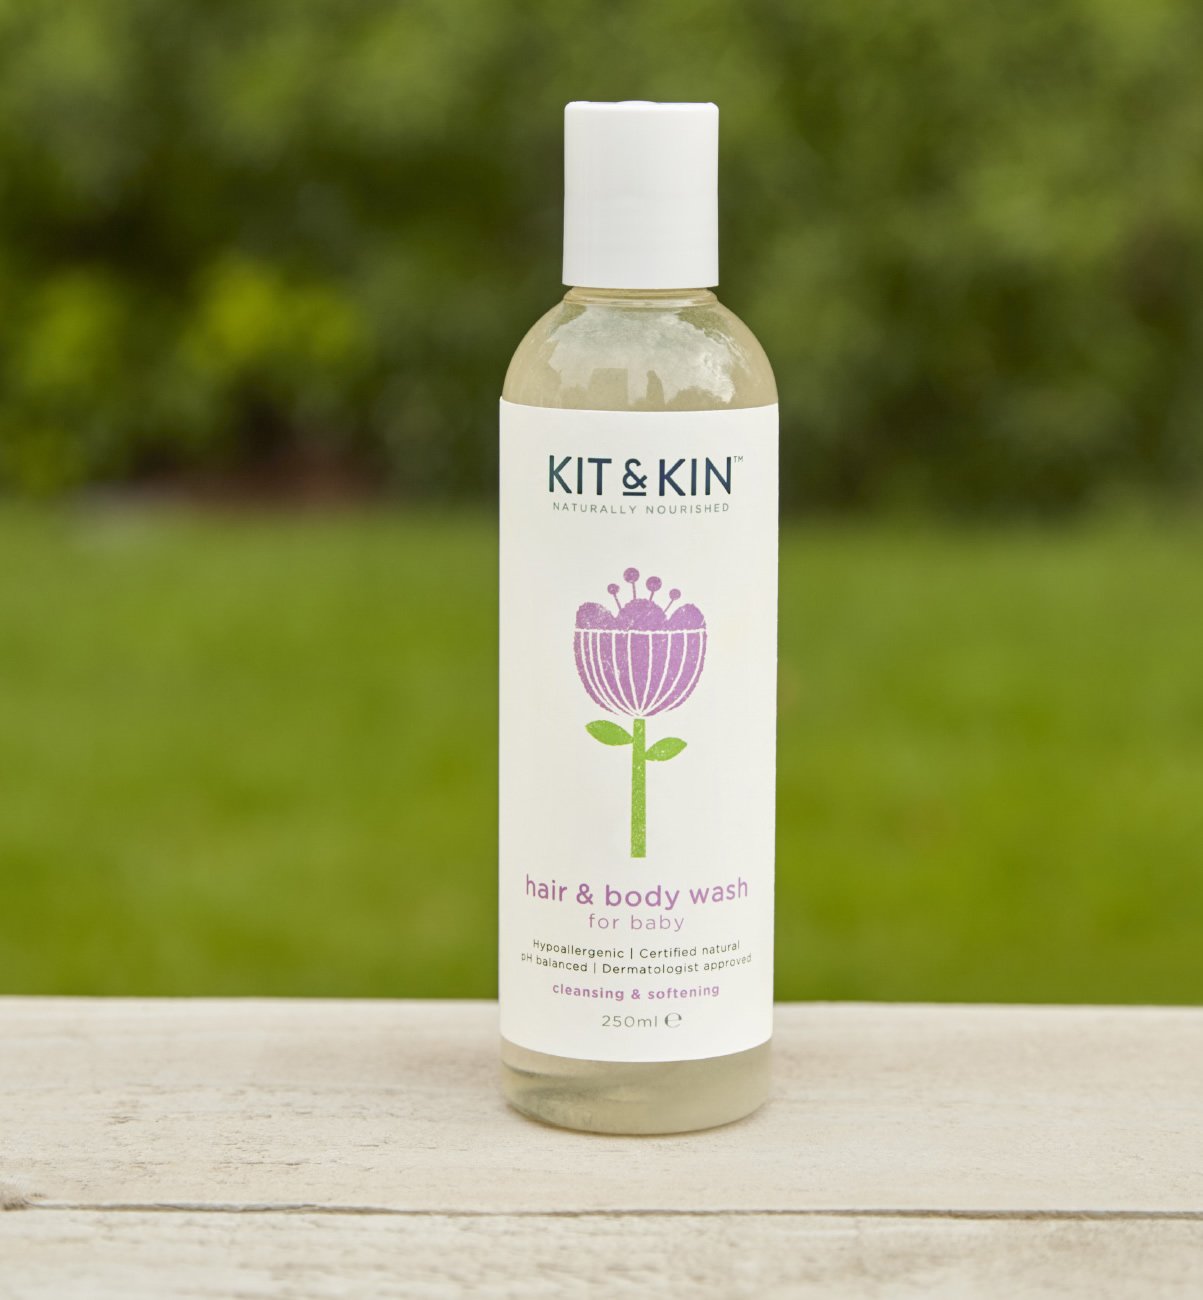 Kit & Kin Hypoallergenic hair & body wash